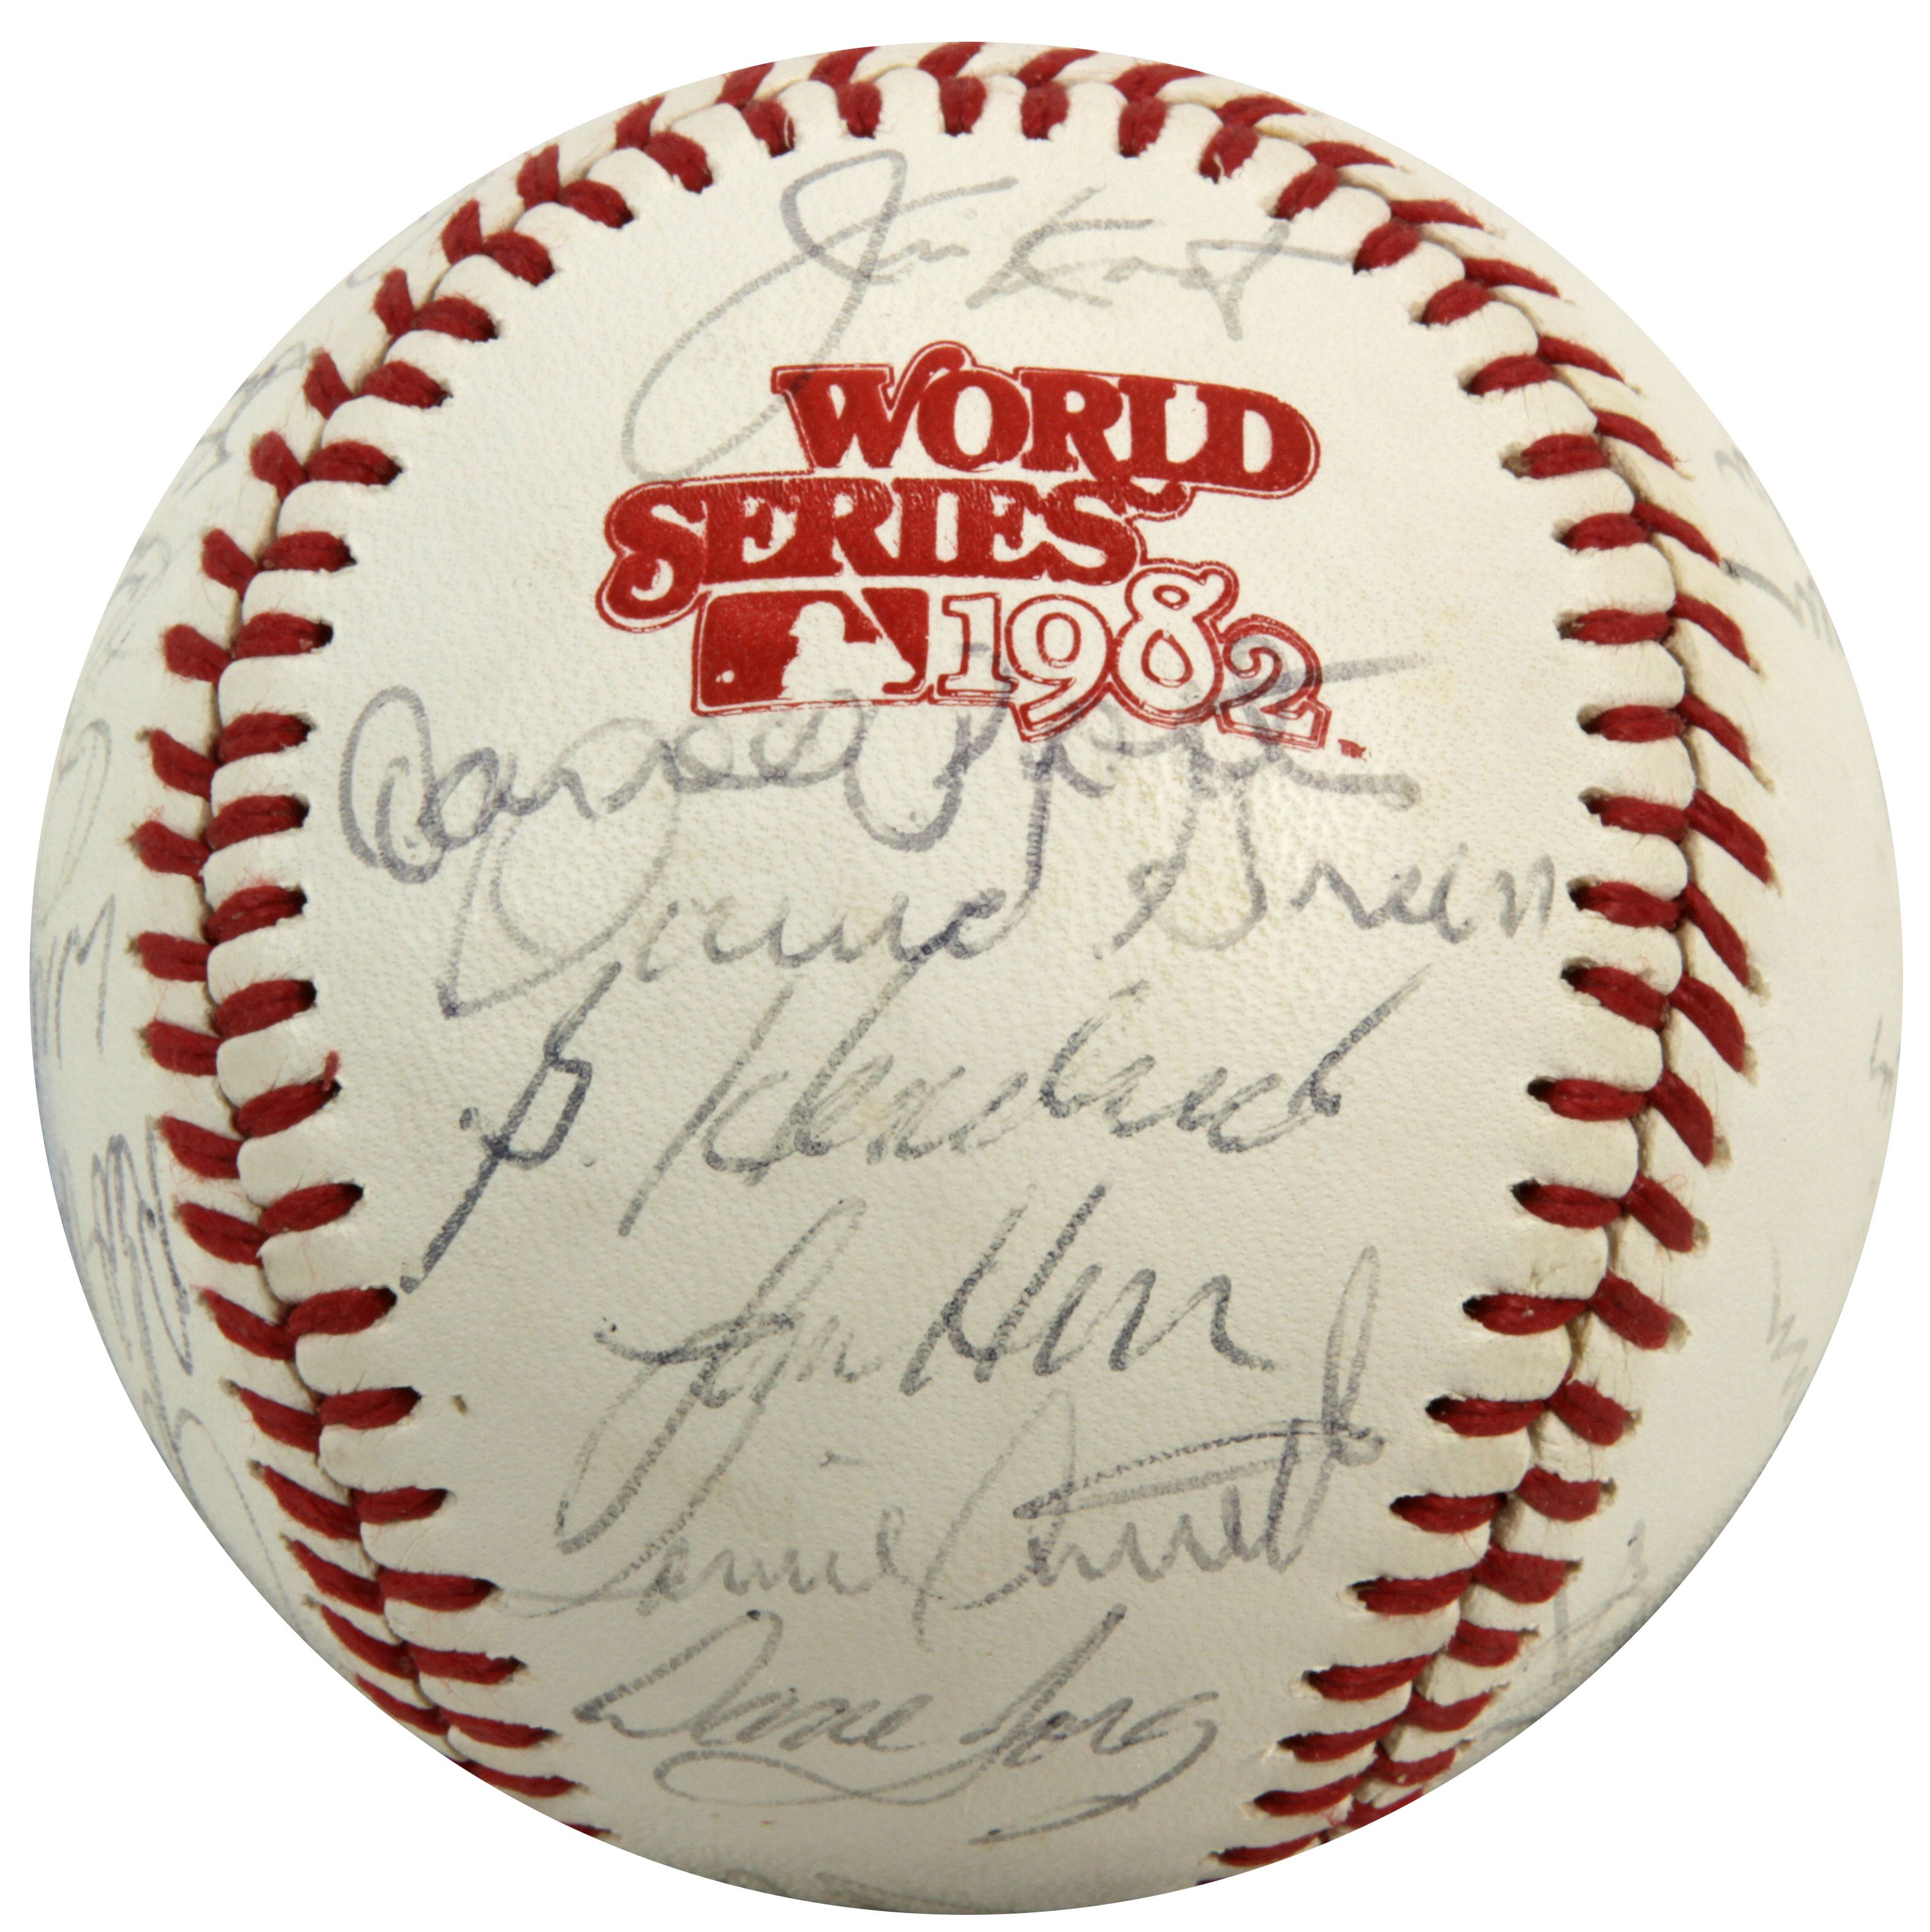 1982 world series - Sports Memorabilia & Autographed Sports